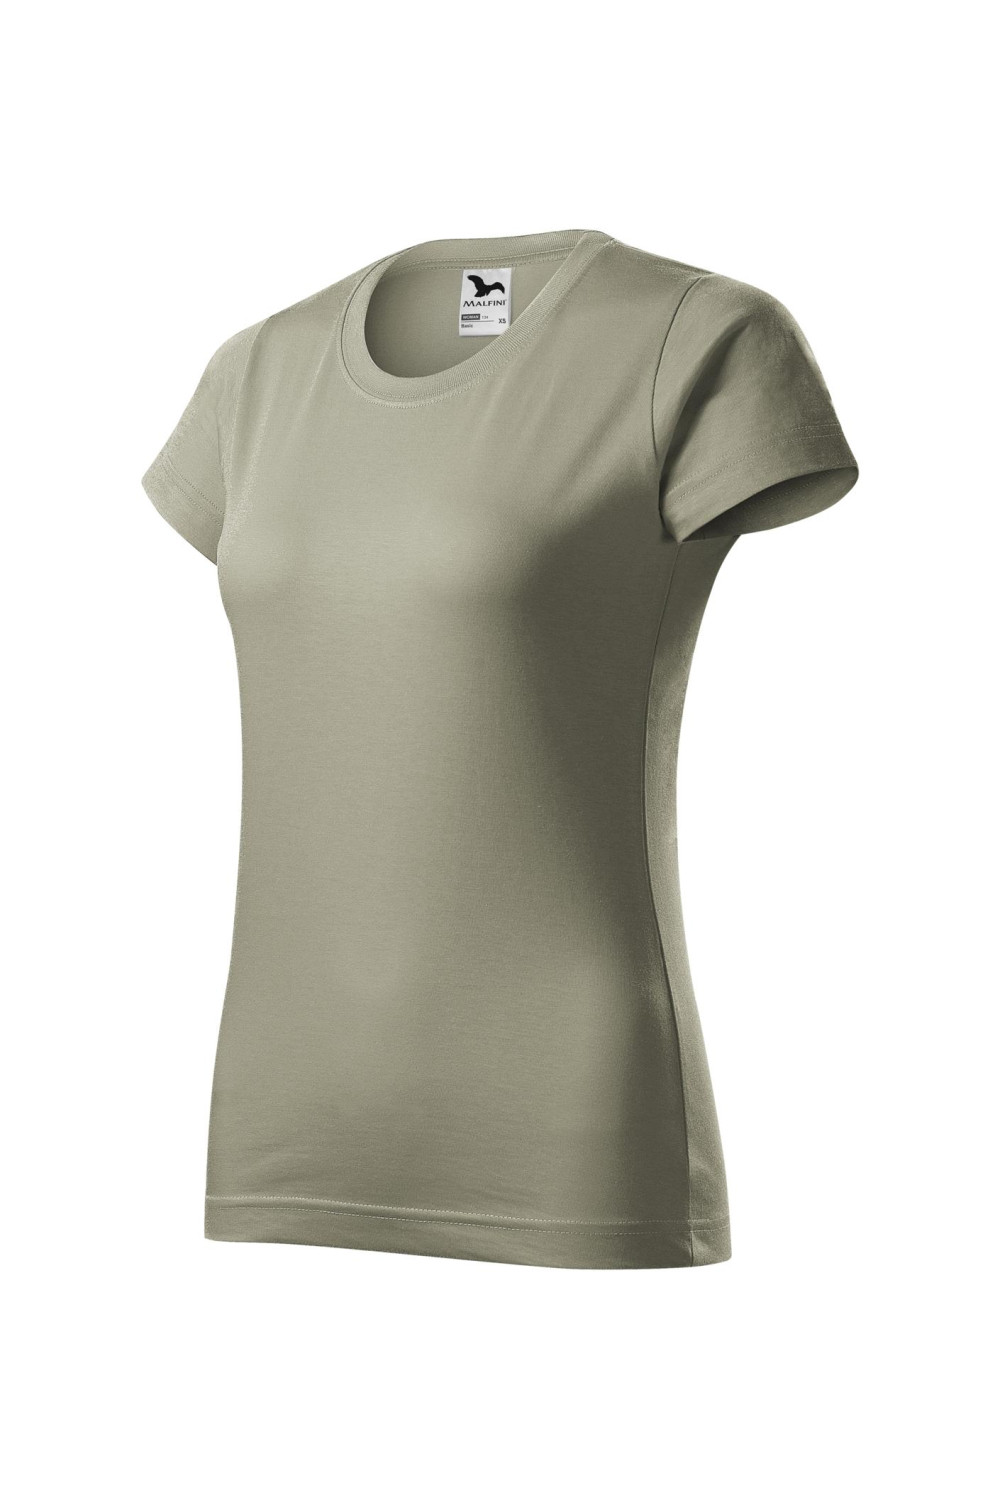 BASIC 134 MALFINI Koszulka damska 100% bawełna t-shirt jasny khaki